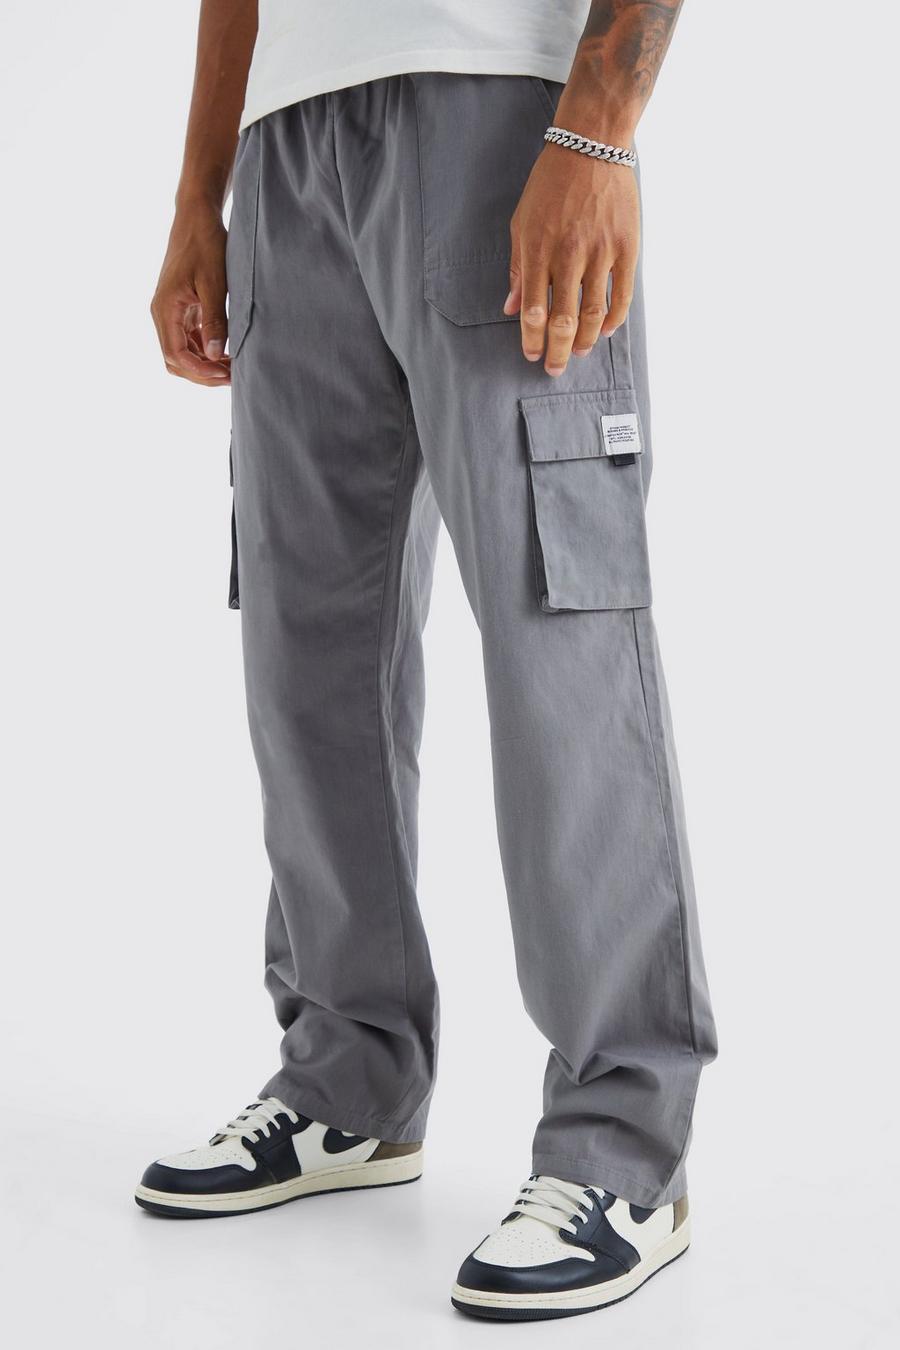 Slate Tall Mjukisbyxor med fickor, elastisk midja och ledig passform